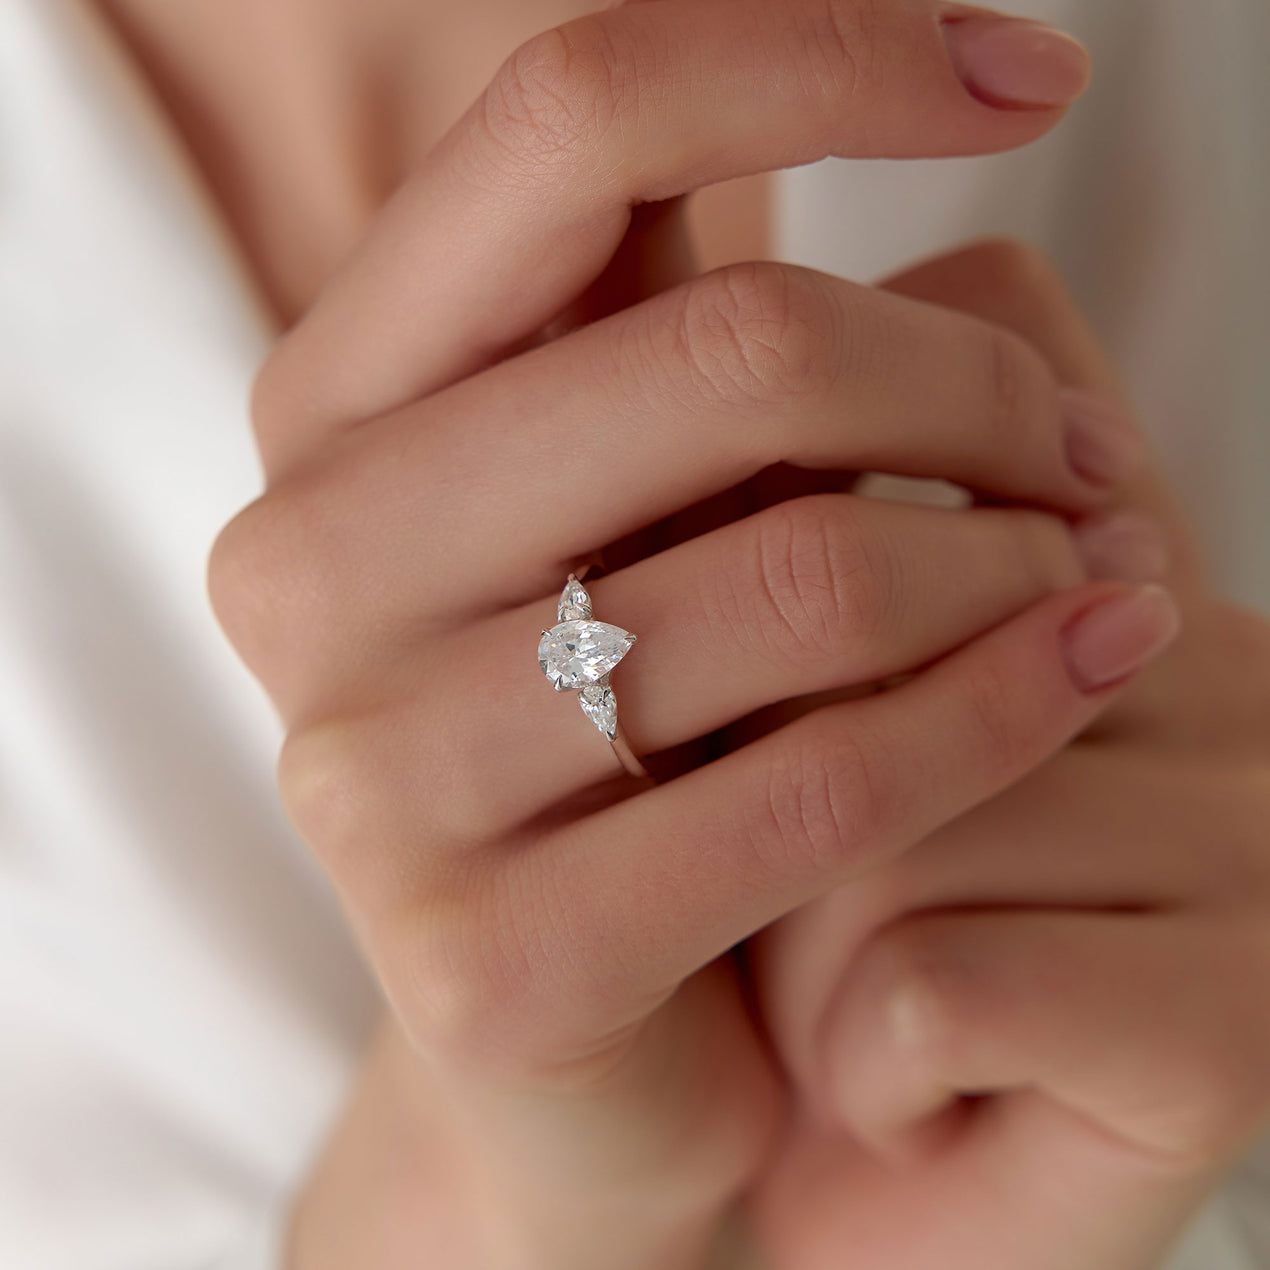 Emma Stone Engagement Ring Details [PHOTOS]